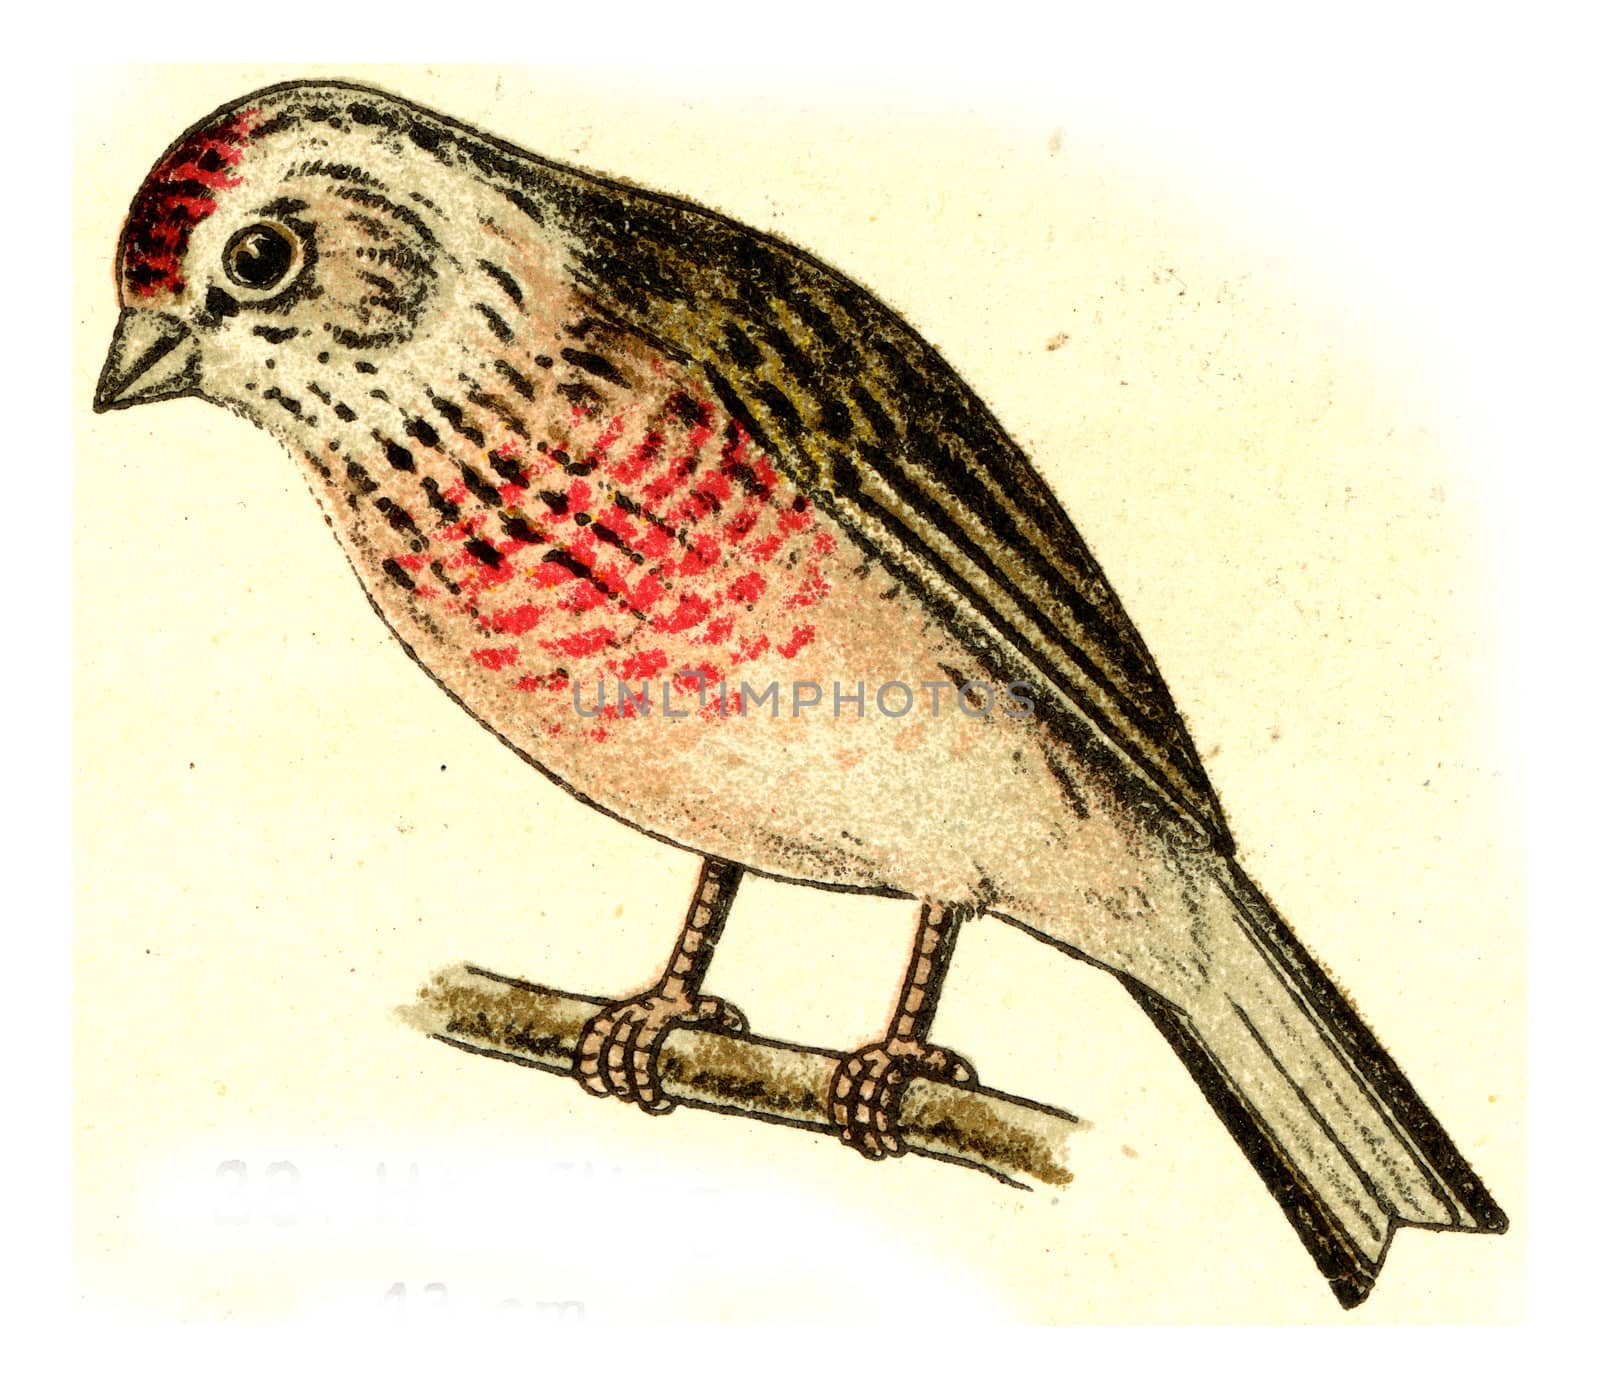 Linnet, vintage engraved illustration. From Deutch Birds of Europe Atlas.
